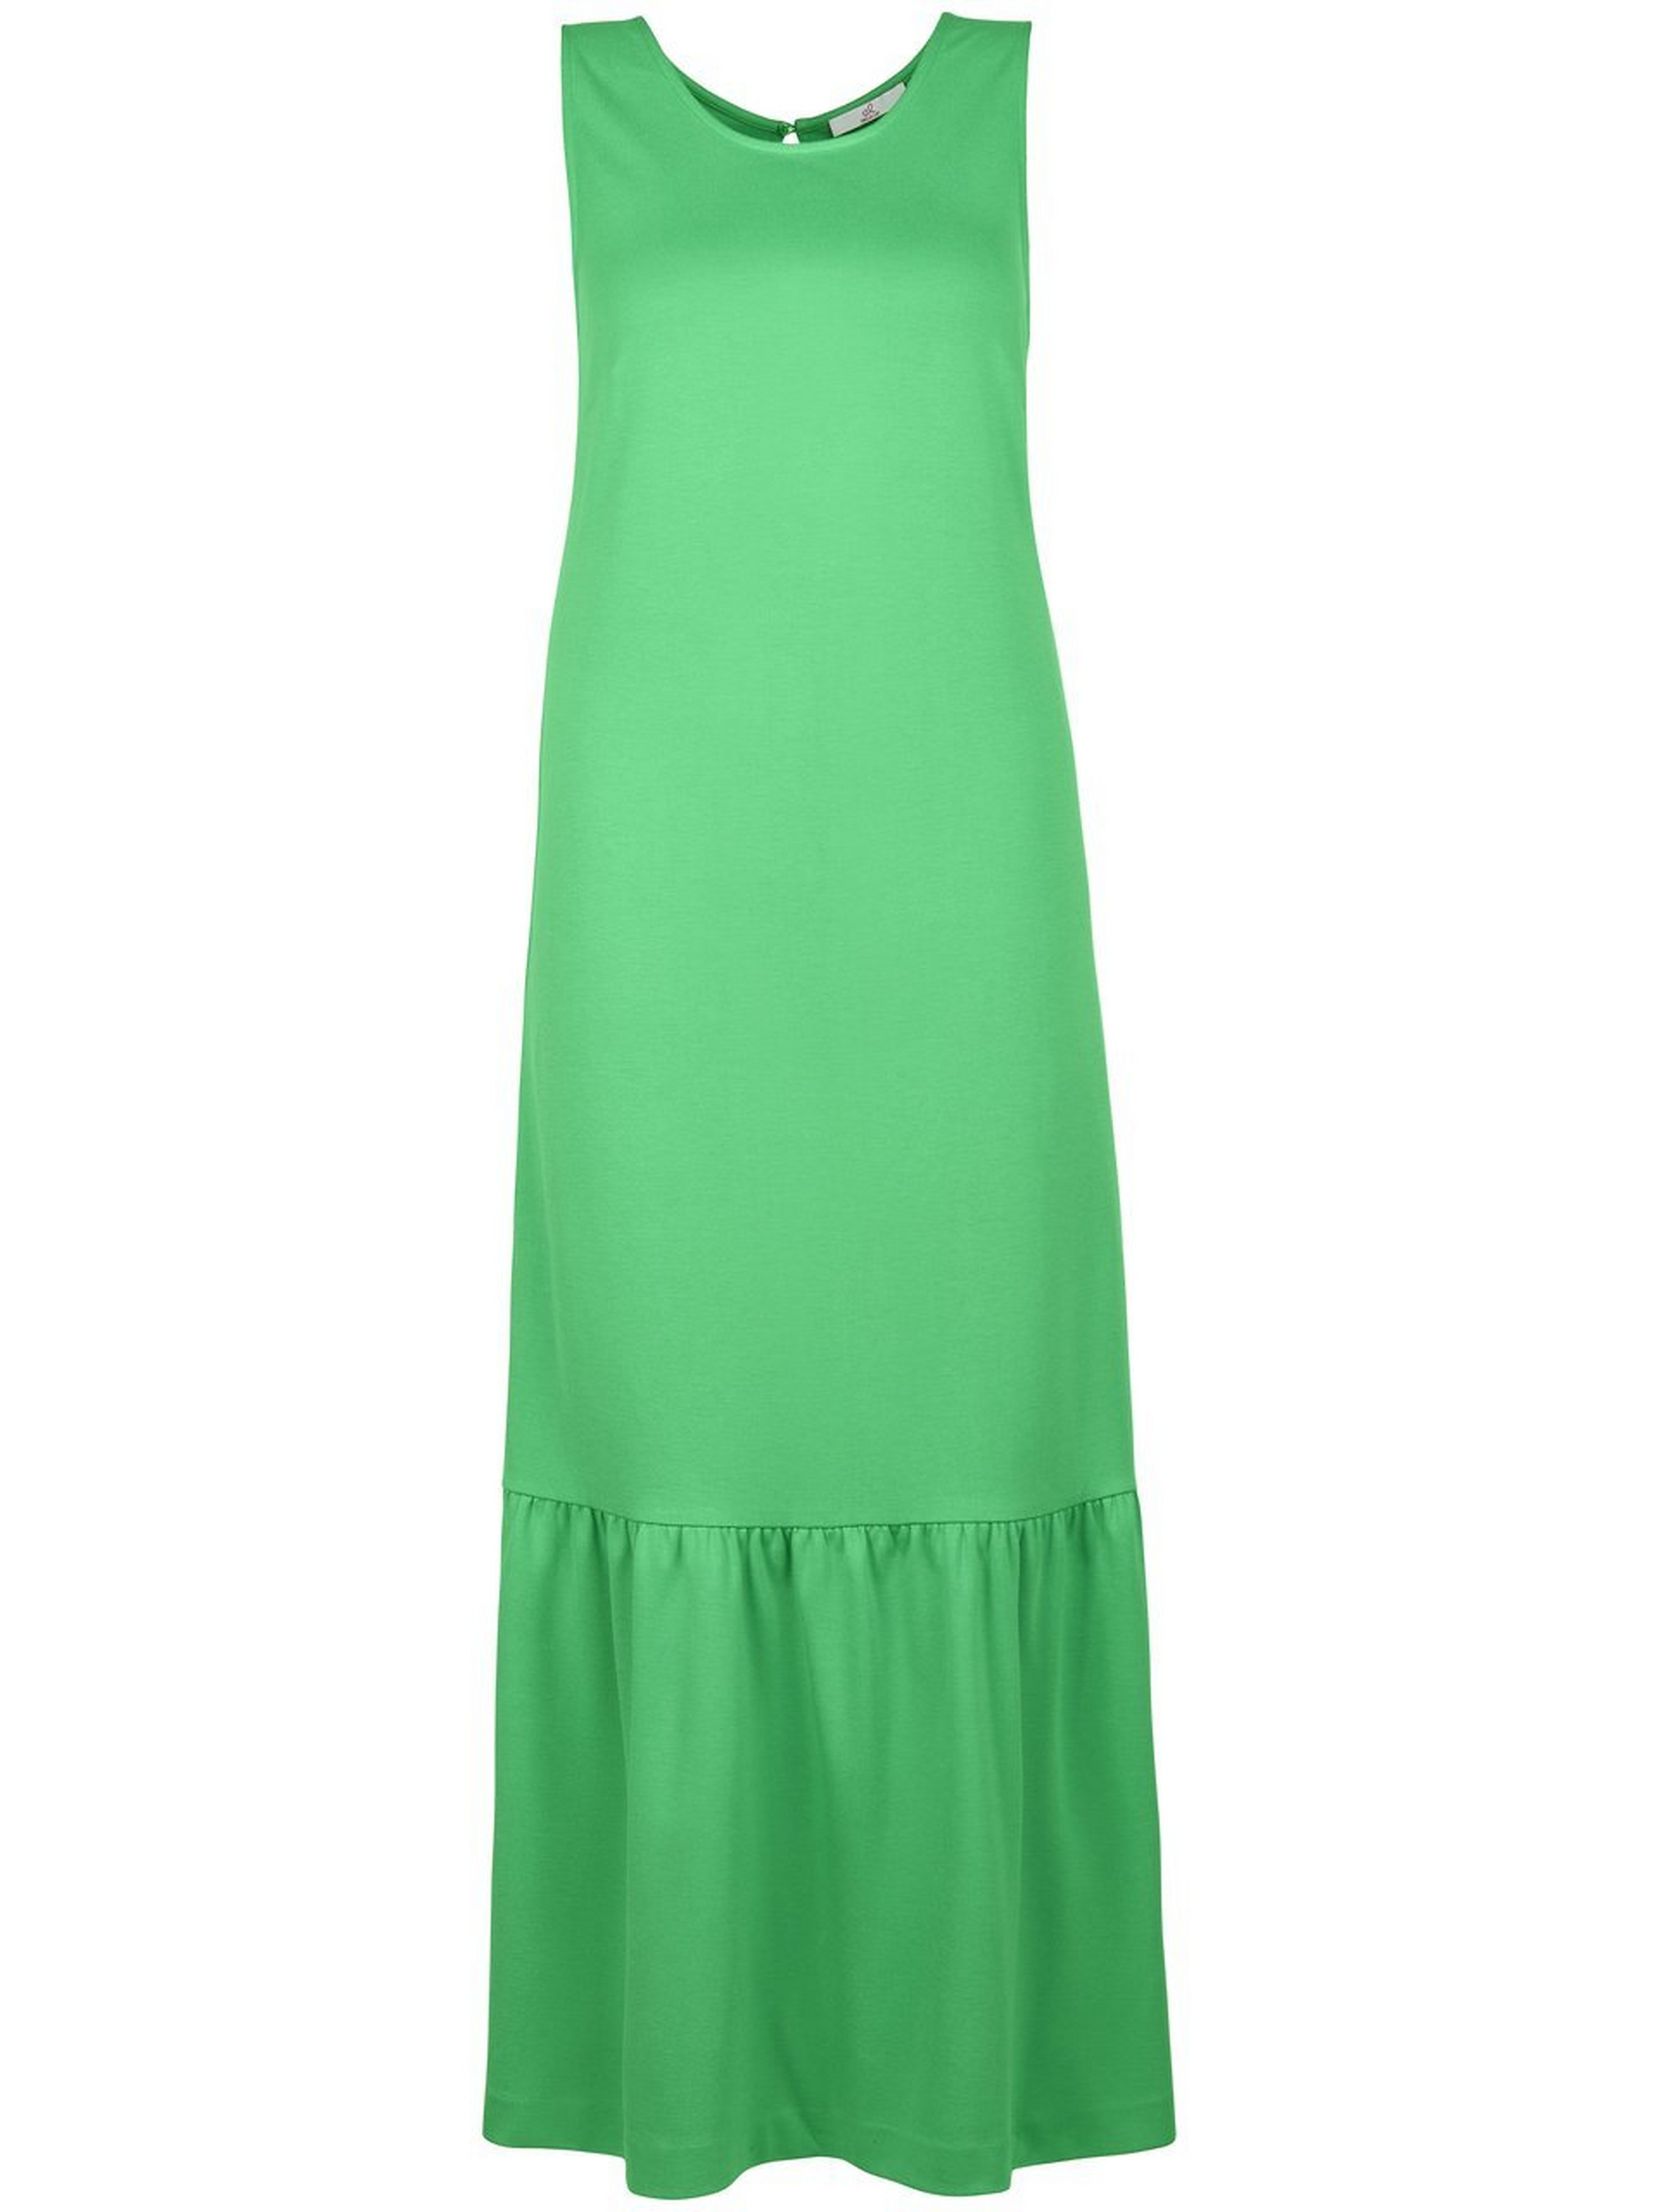 Mouwloze jersey jurk Van Emilia Lay groen